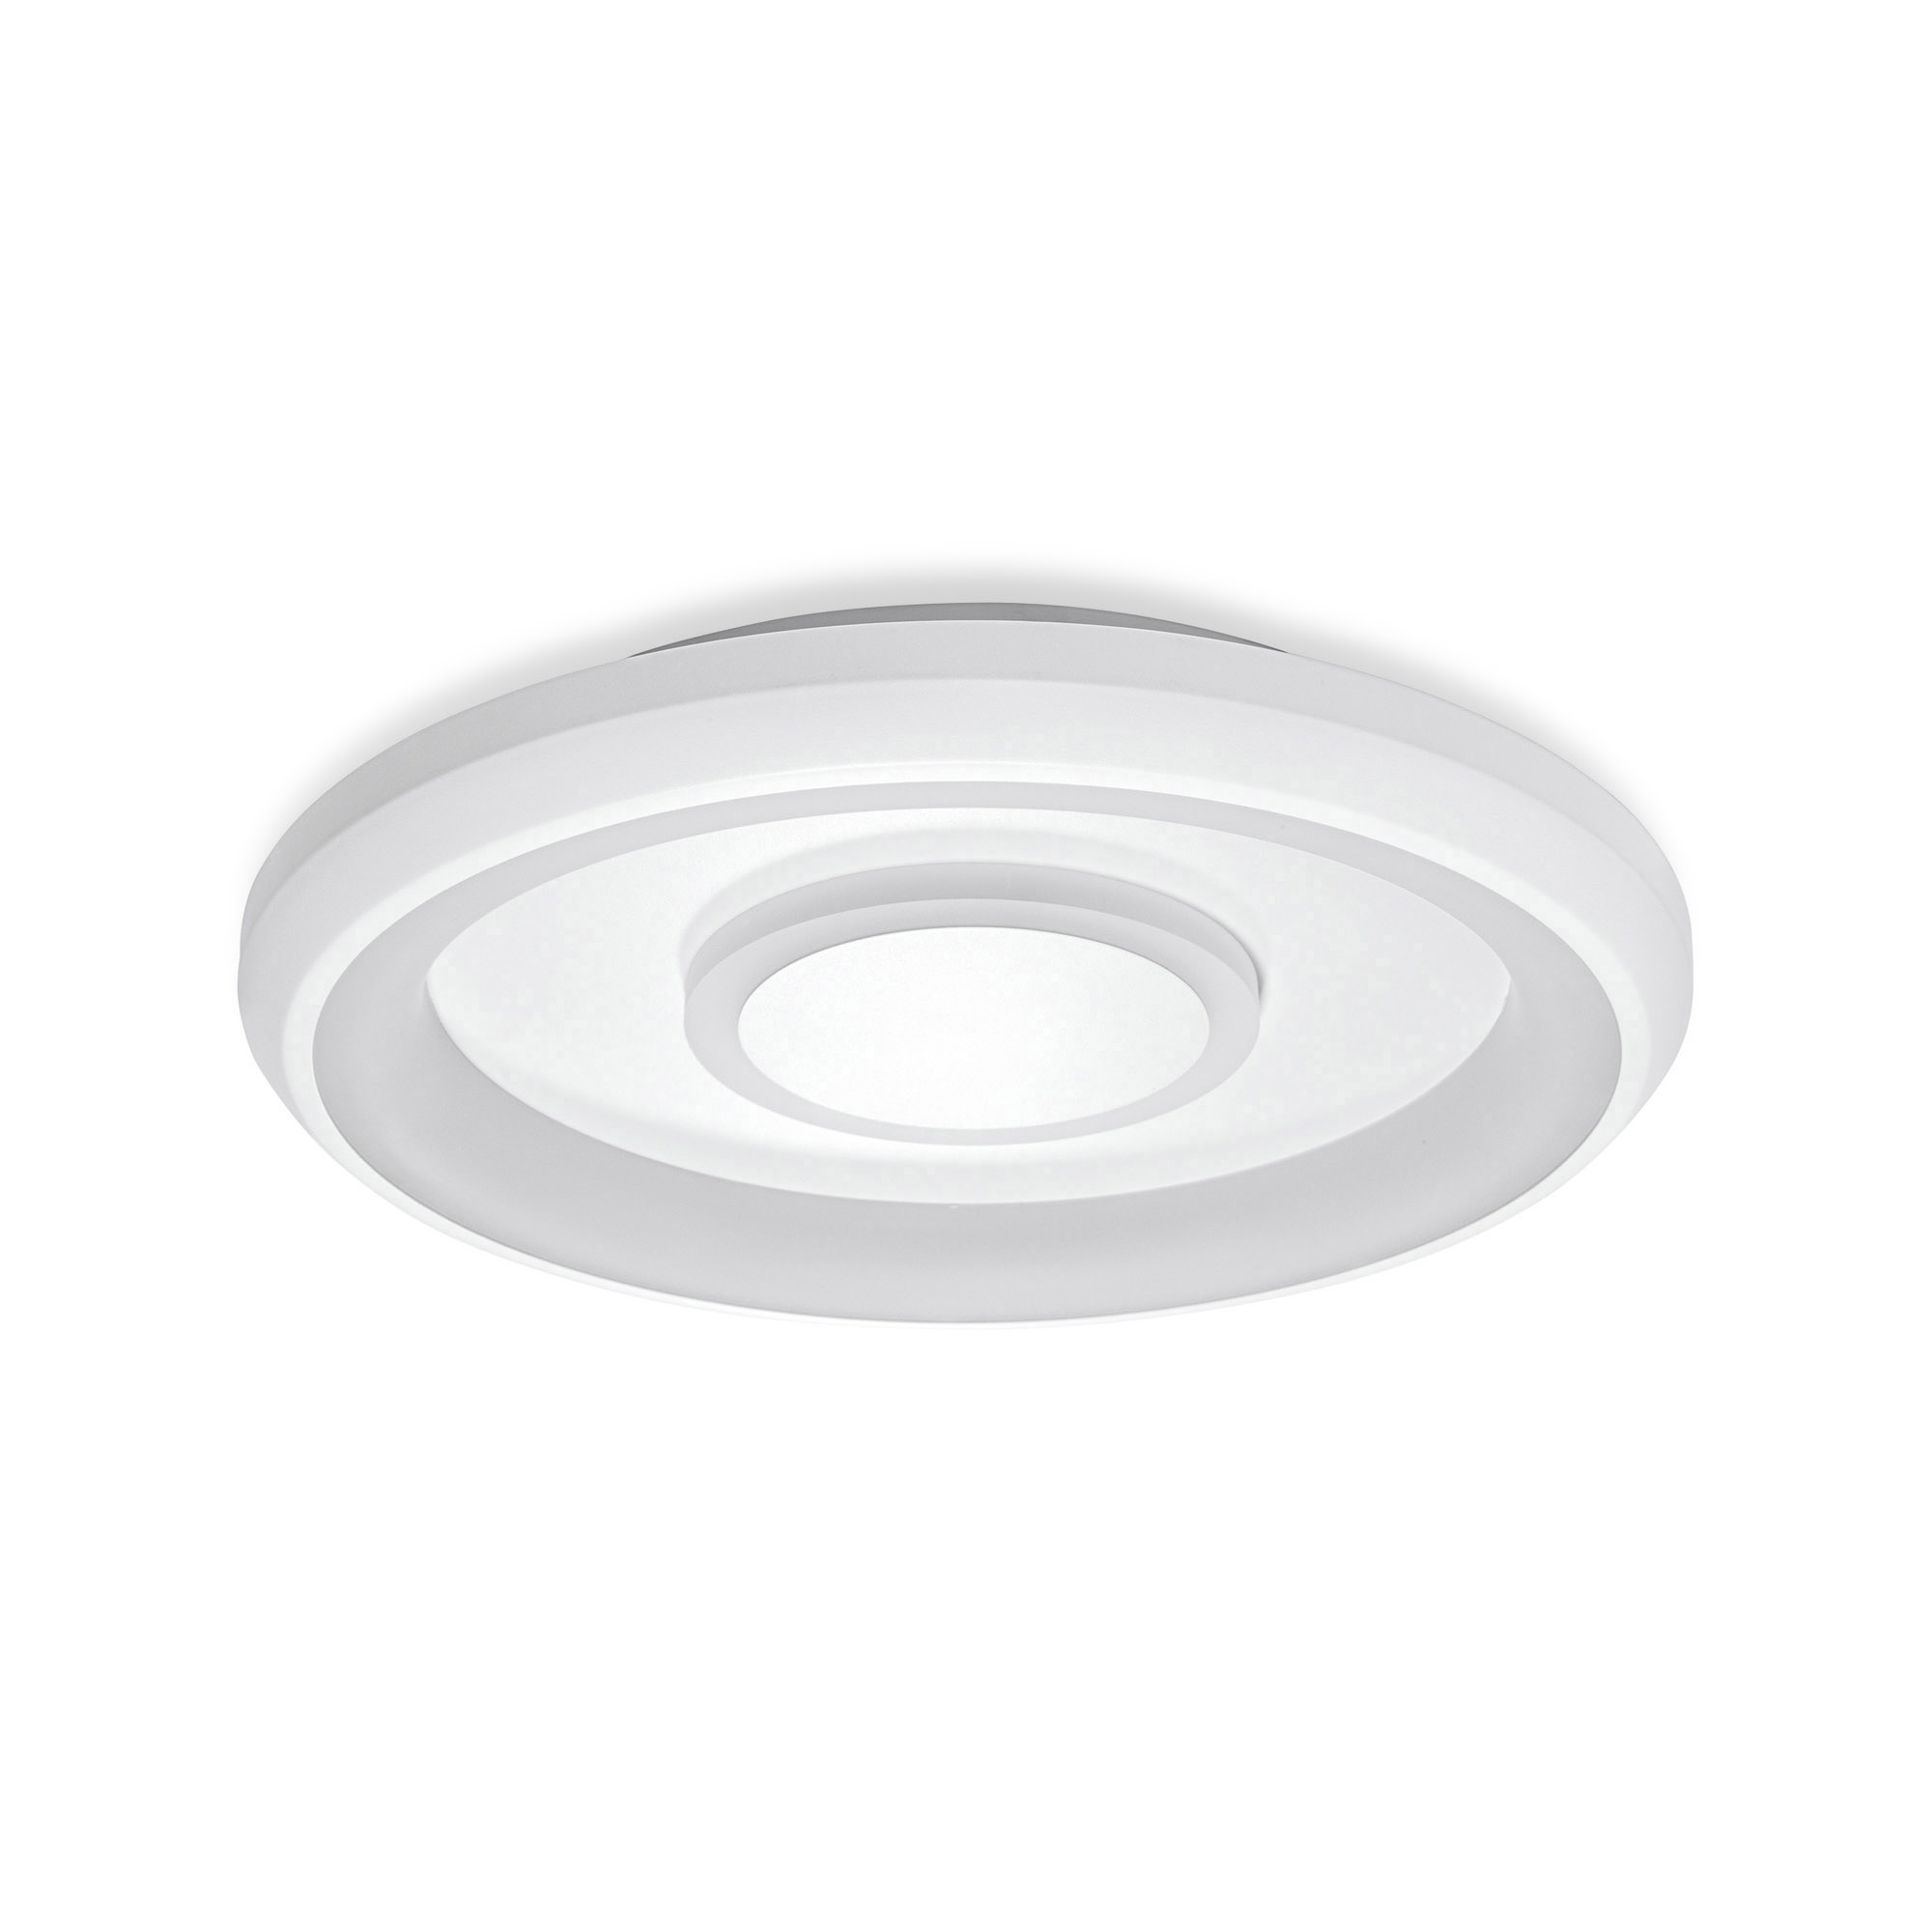 LEDVANCE SMART+ WiFi Tunable White RGB LED Ceiling Light ORBIS Stea 485mm white 3350lm